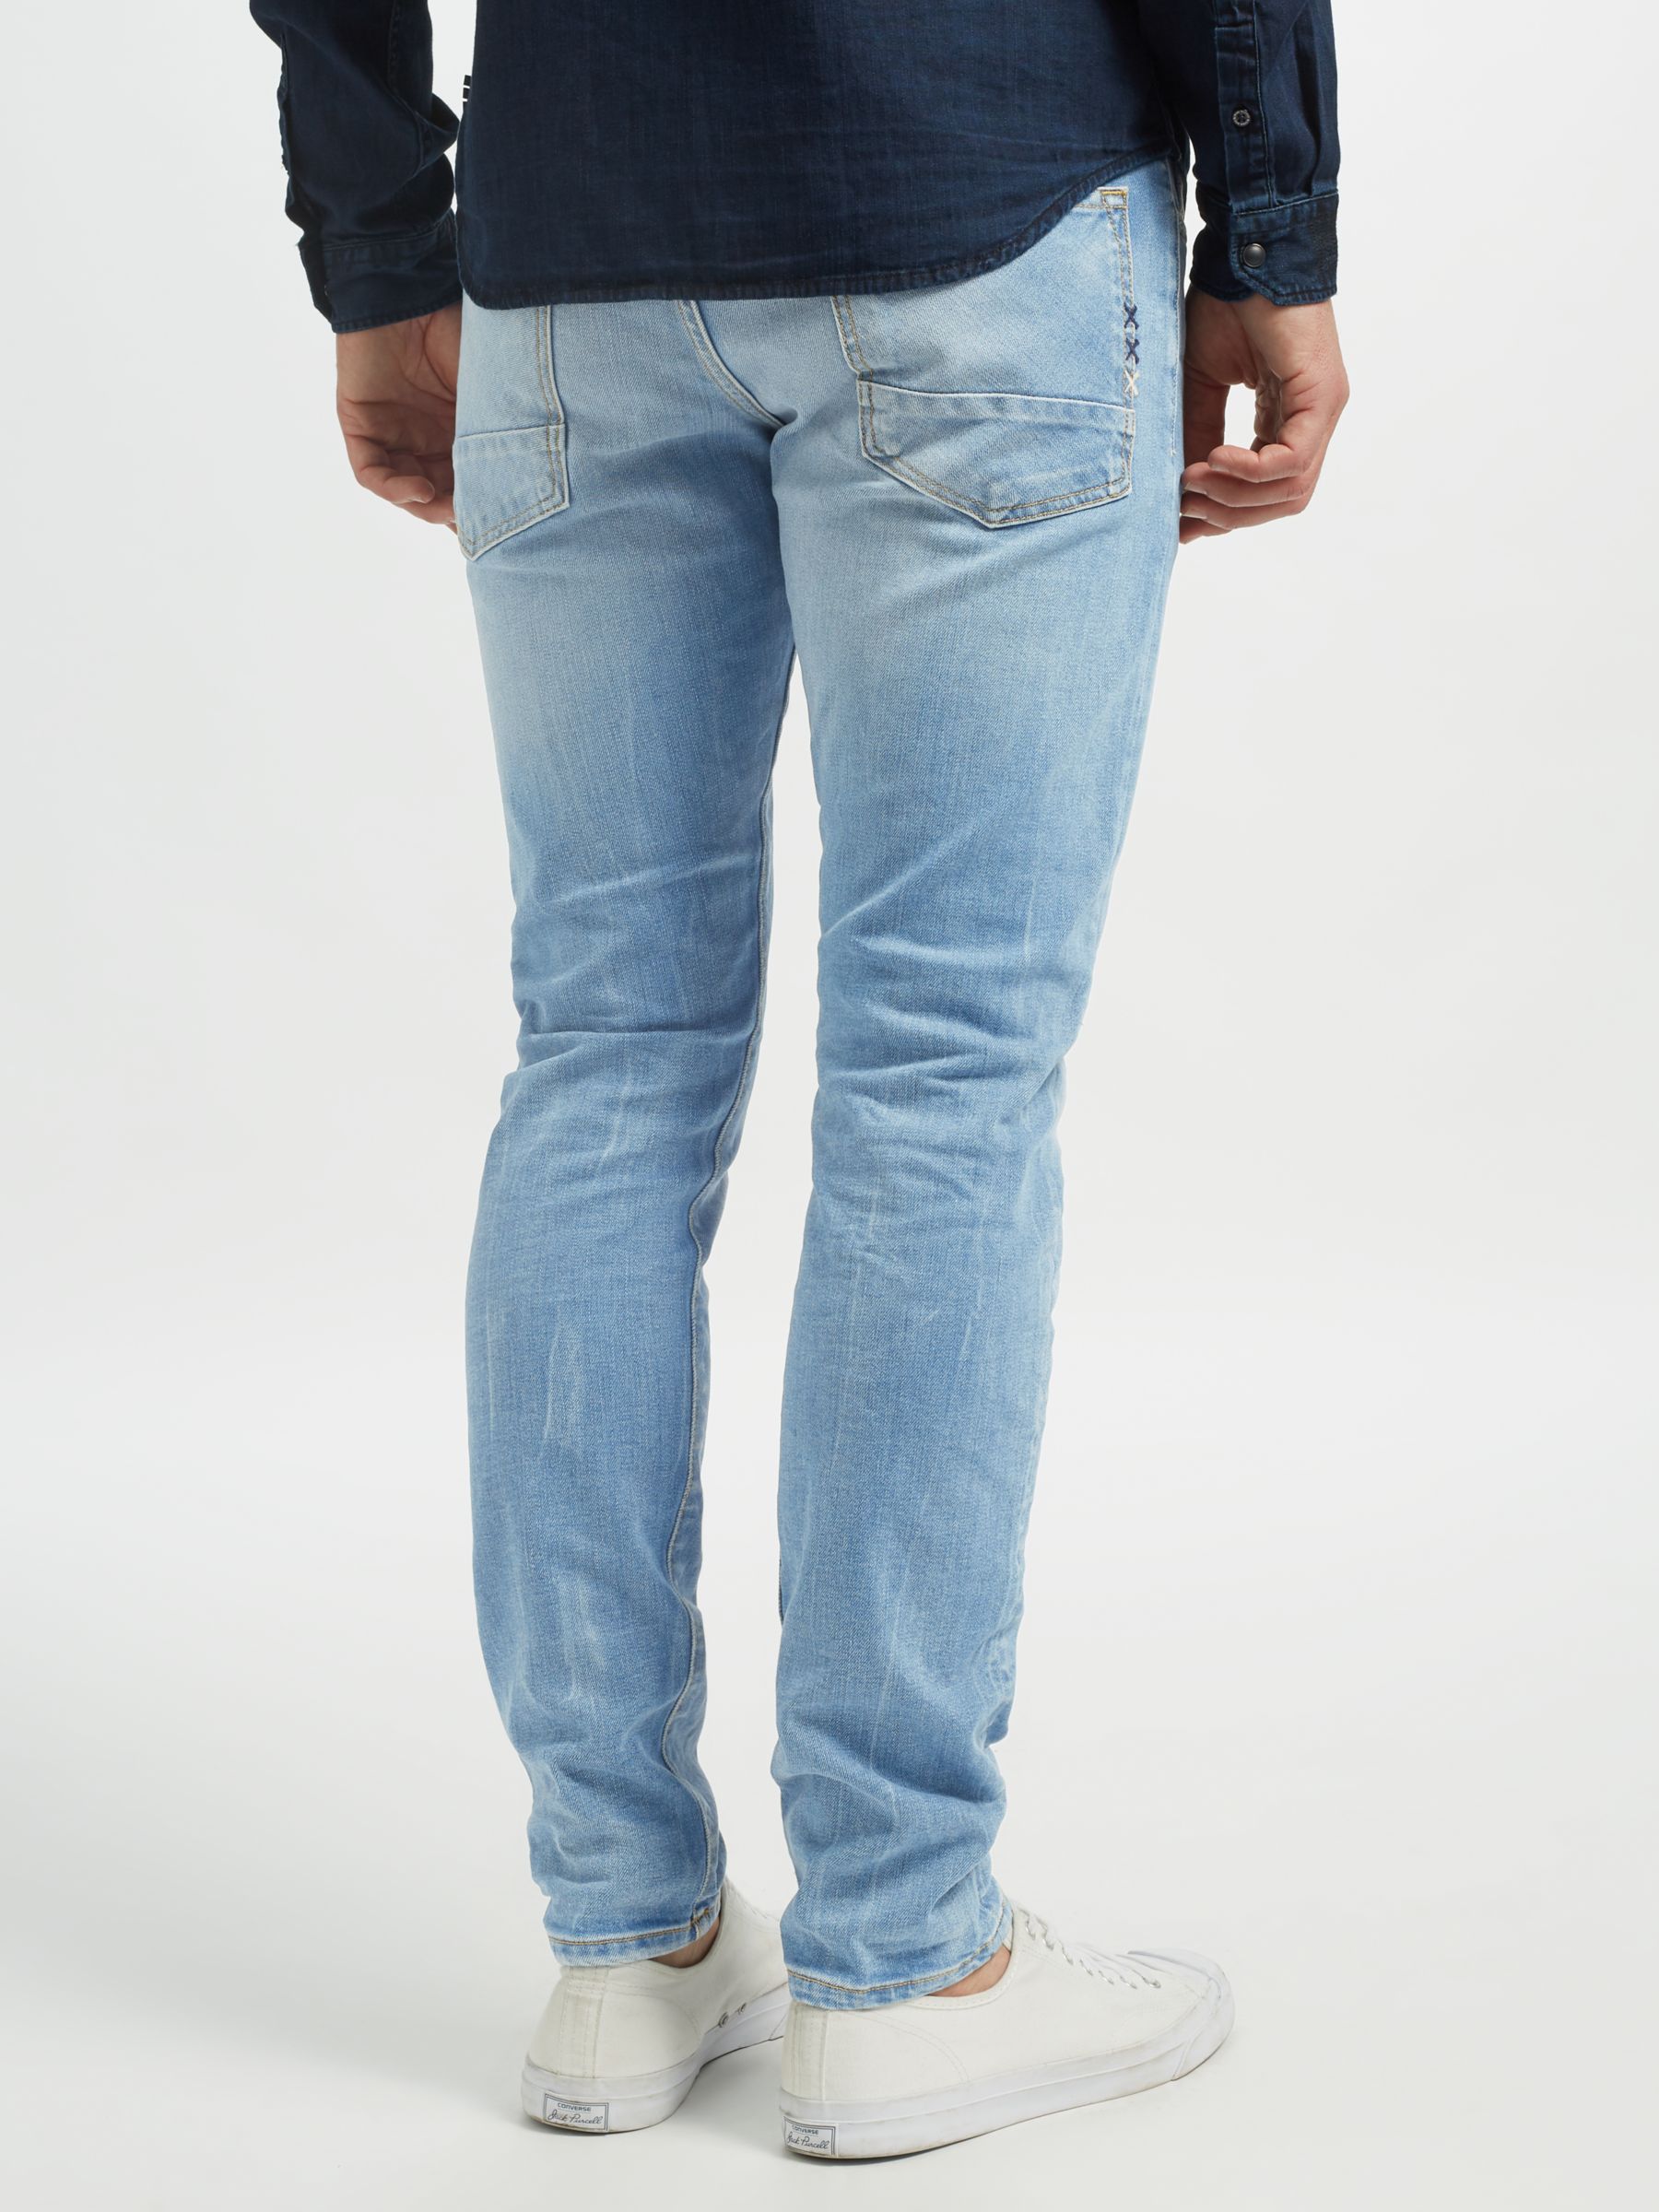 ralston regular slim fit jeans